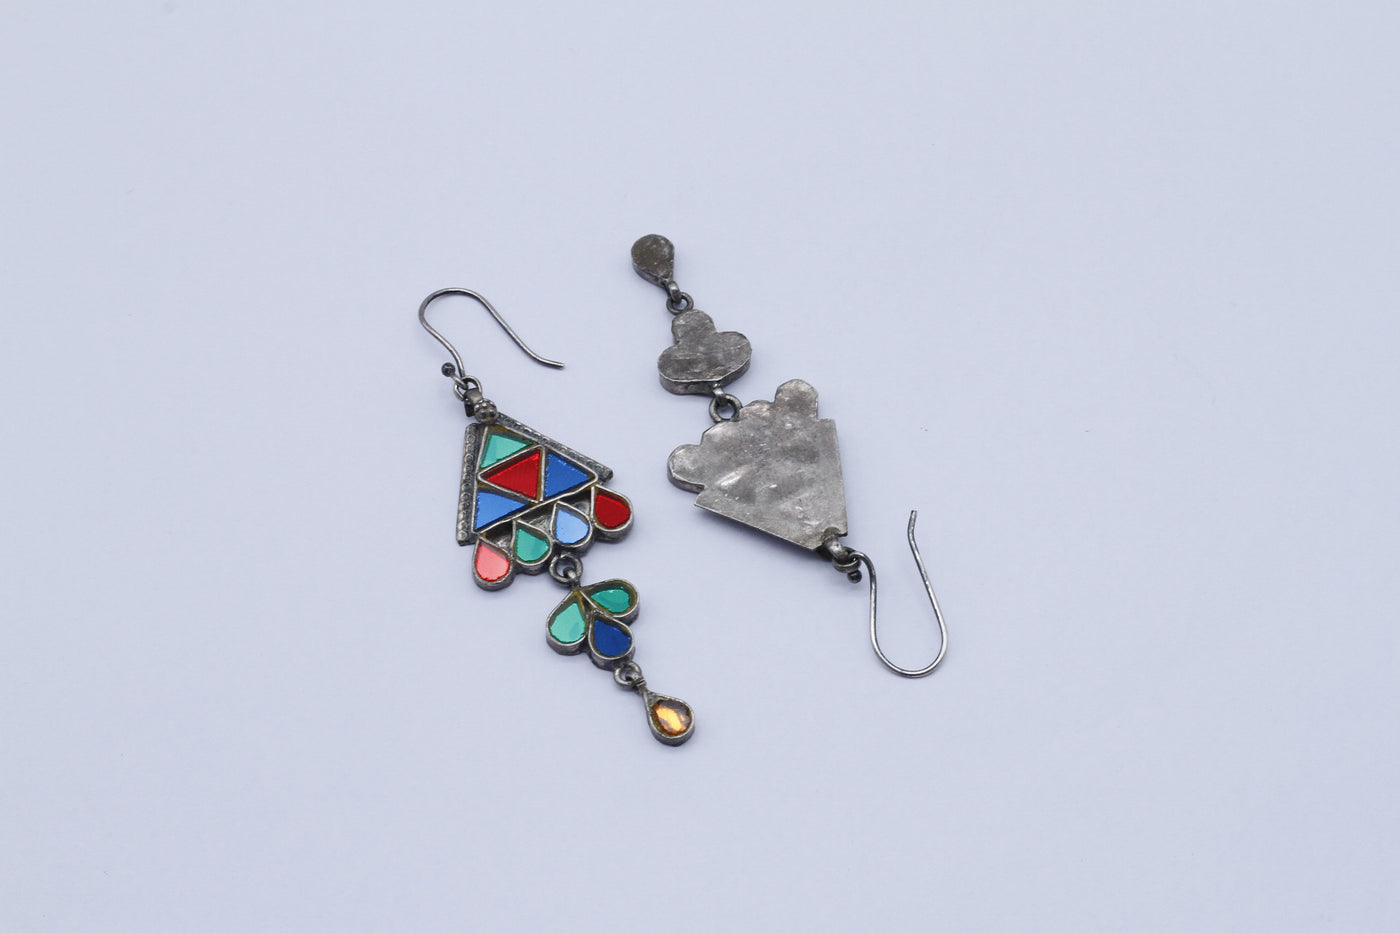 Charming Silver Hanging Drop Chain Earring